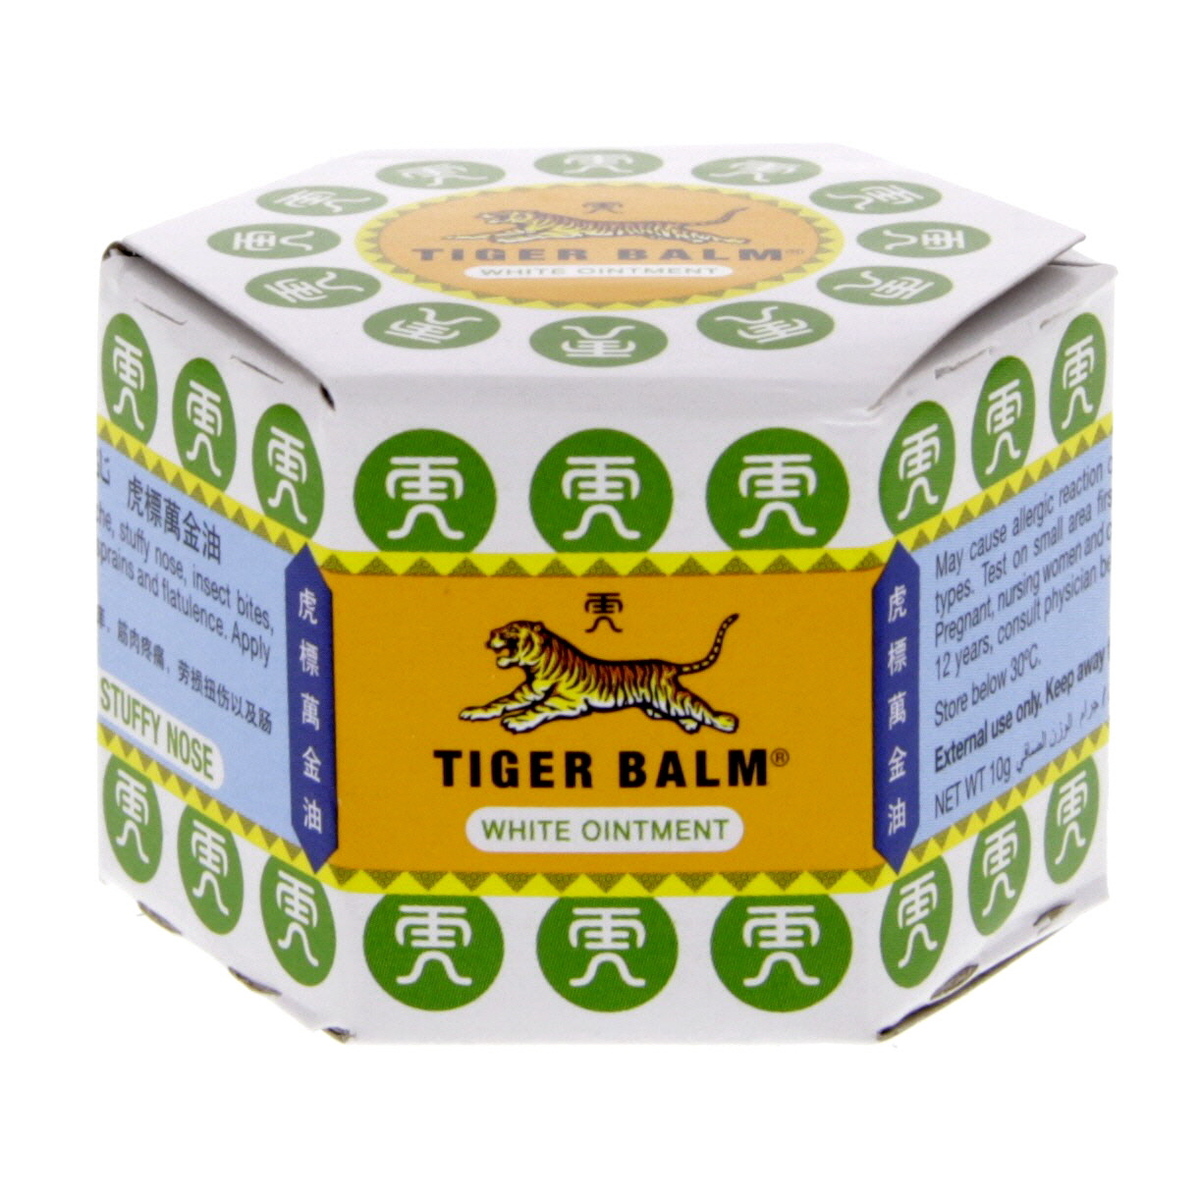 Tiger Balm White Ointment 10g